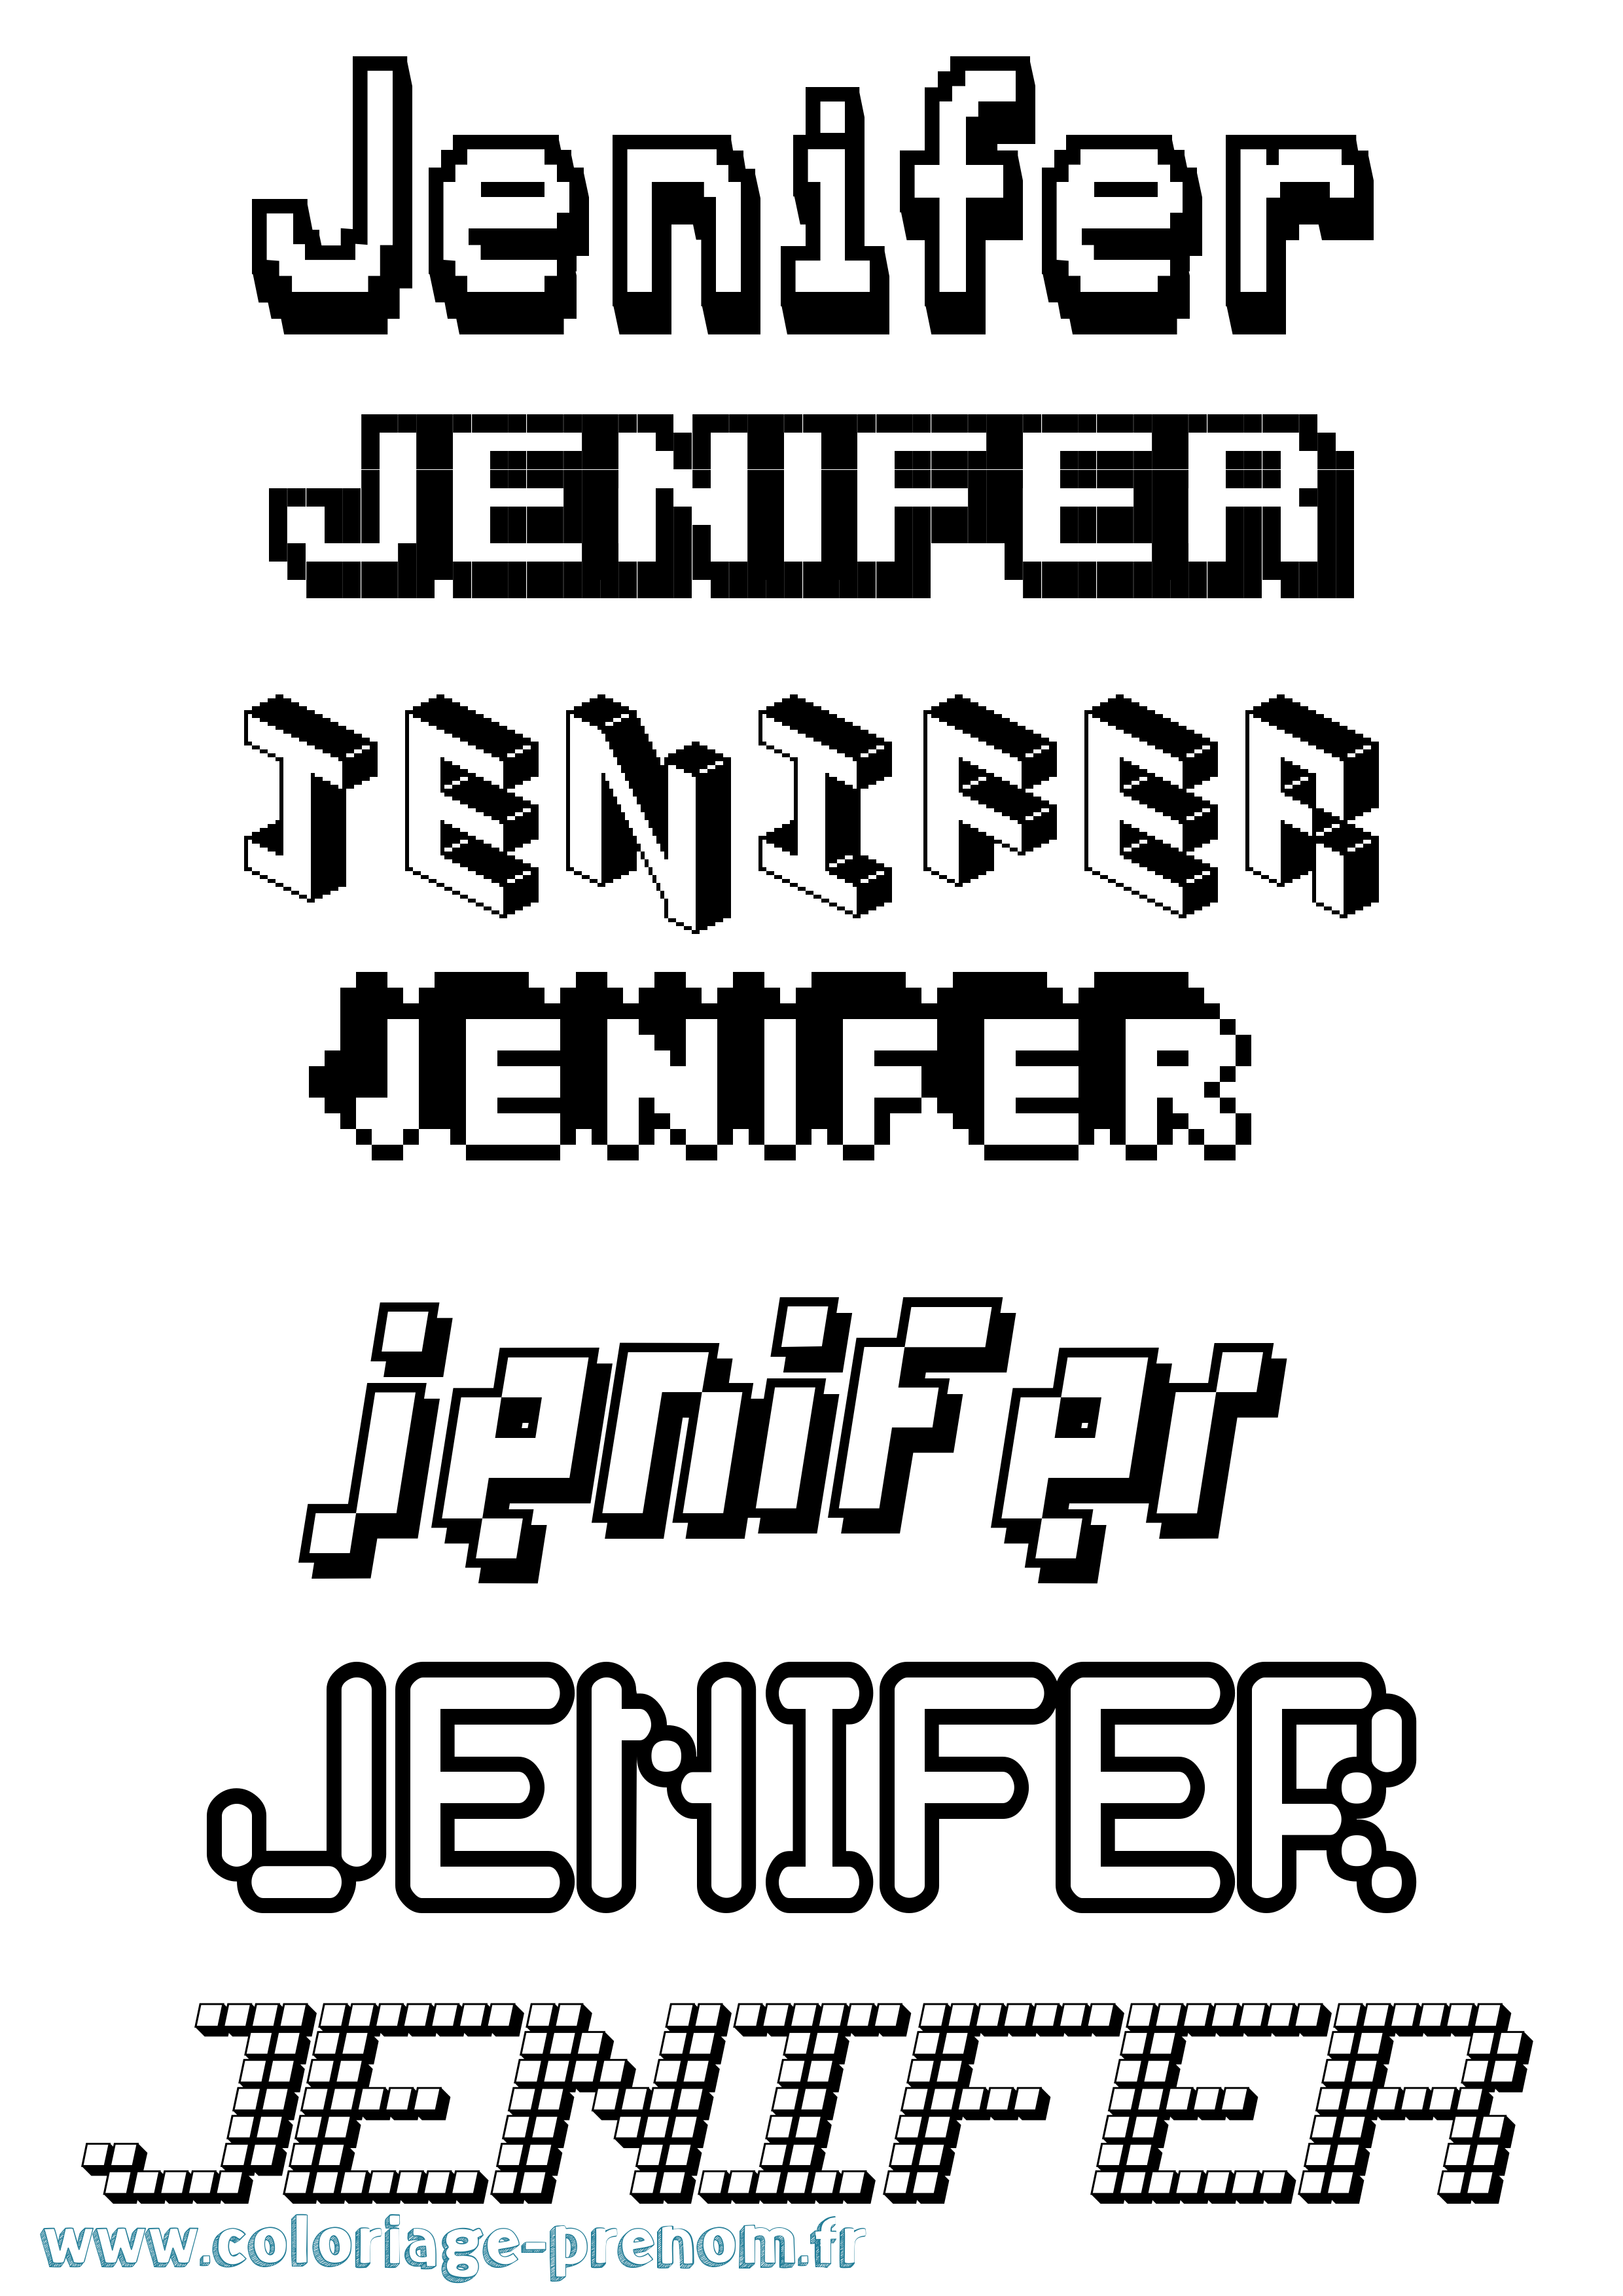 Coloriage prénom Jenifer Pixel